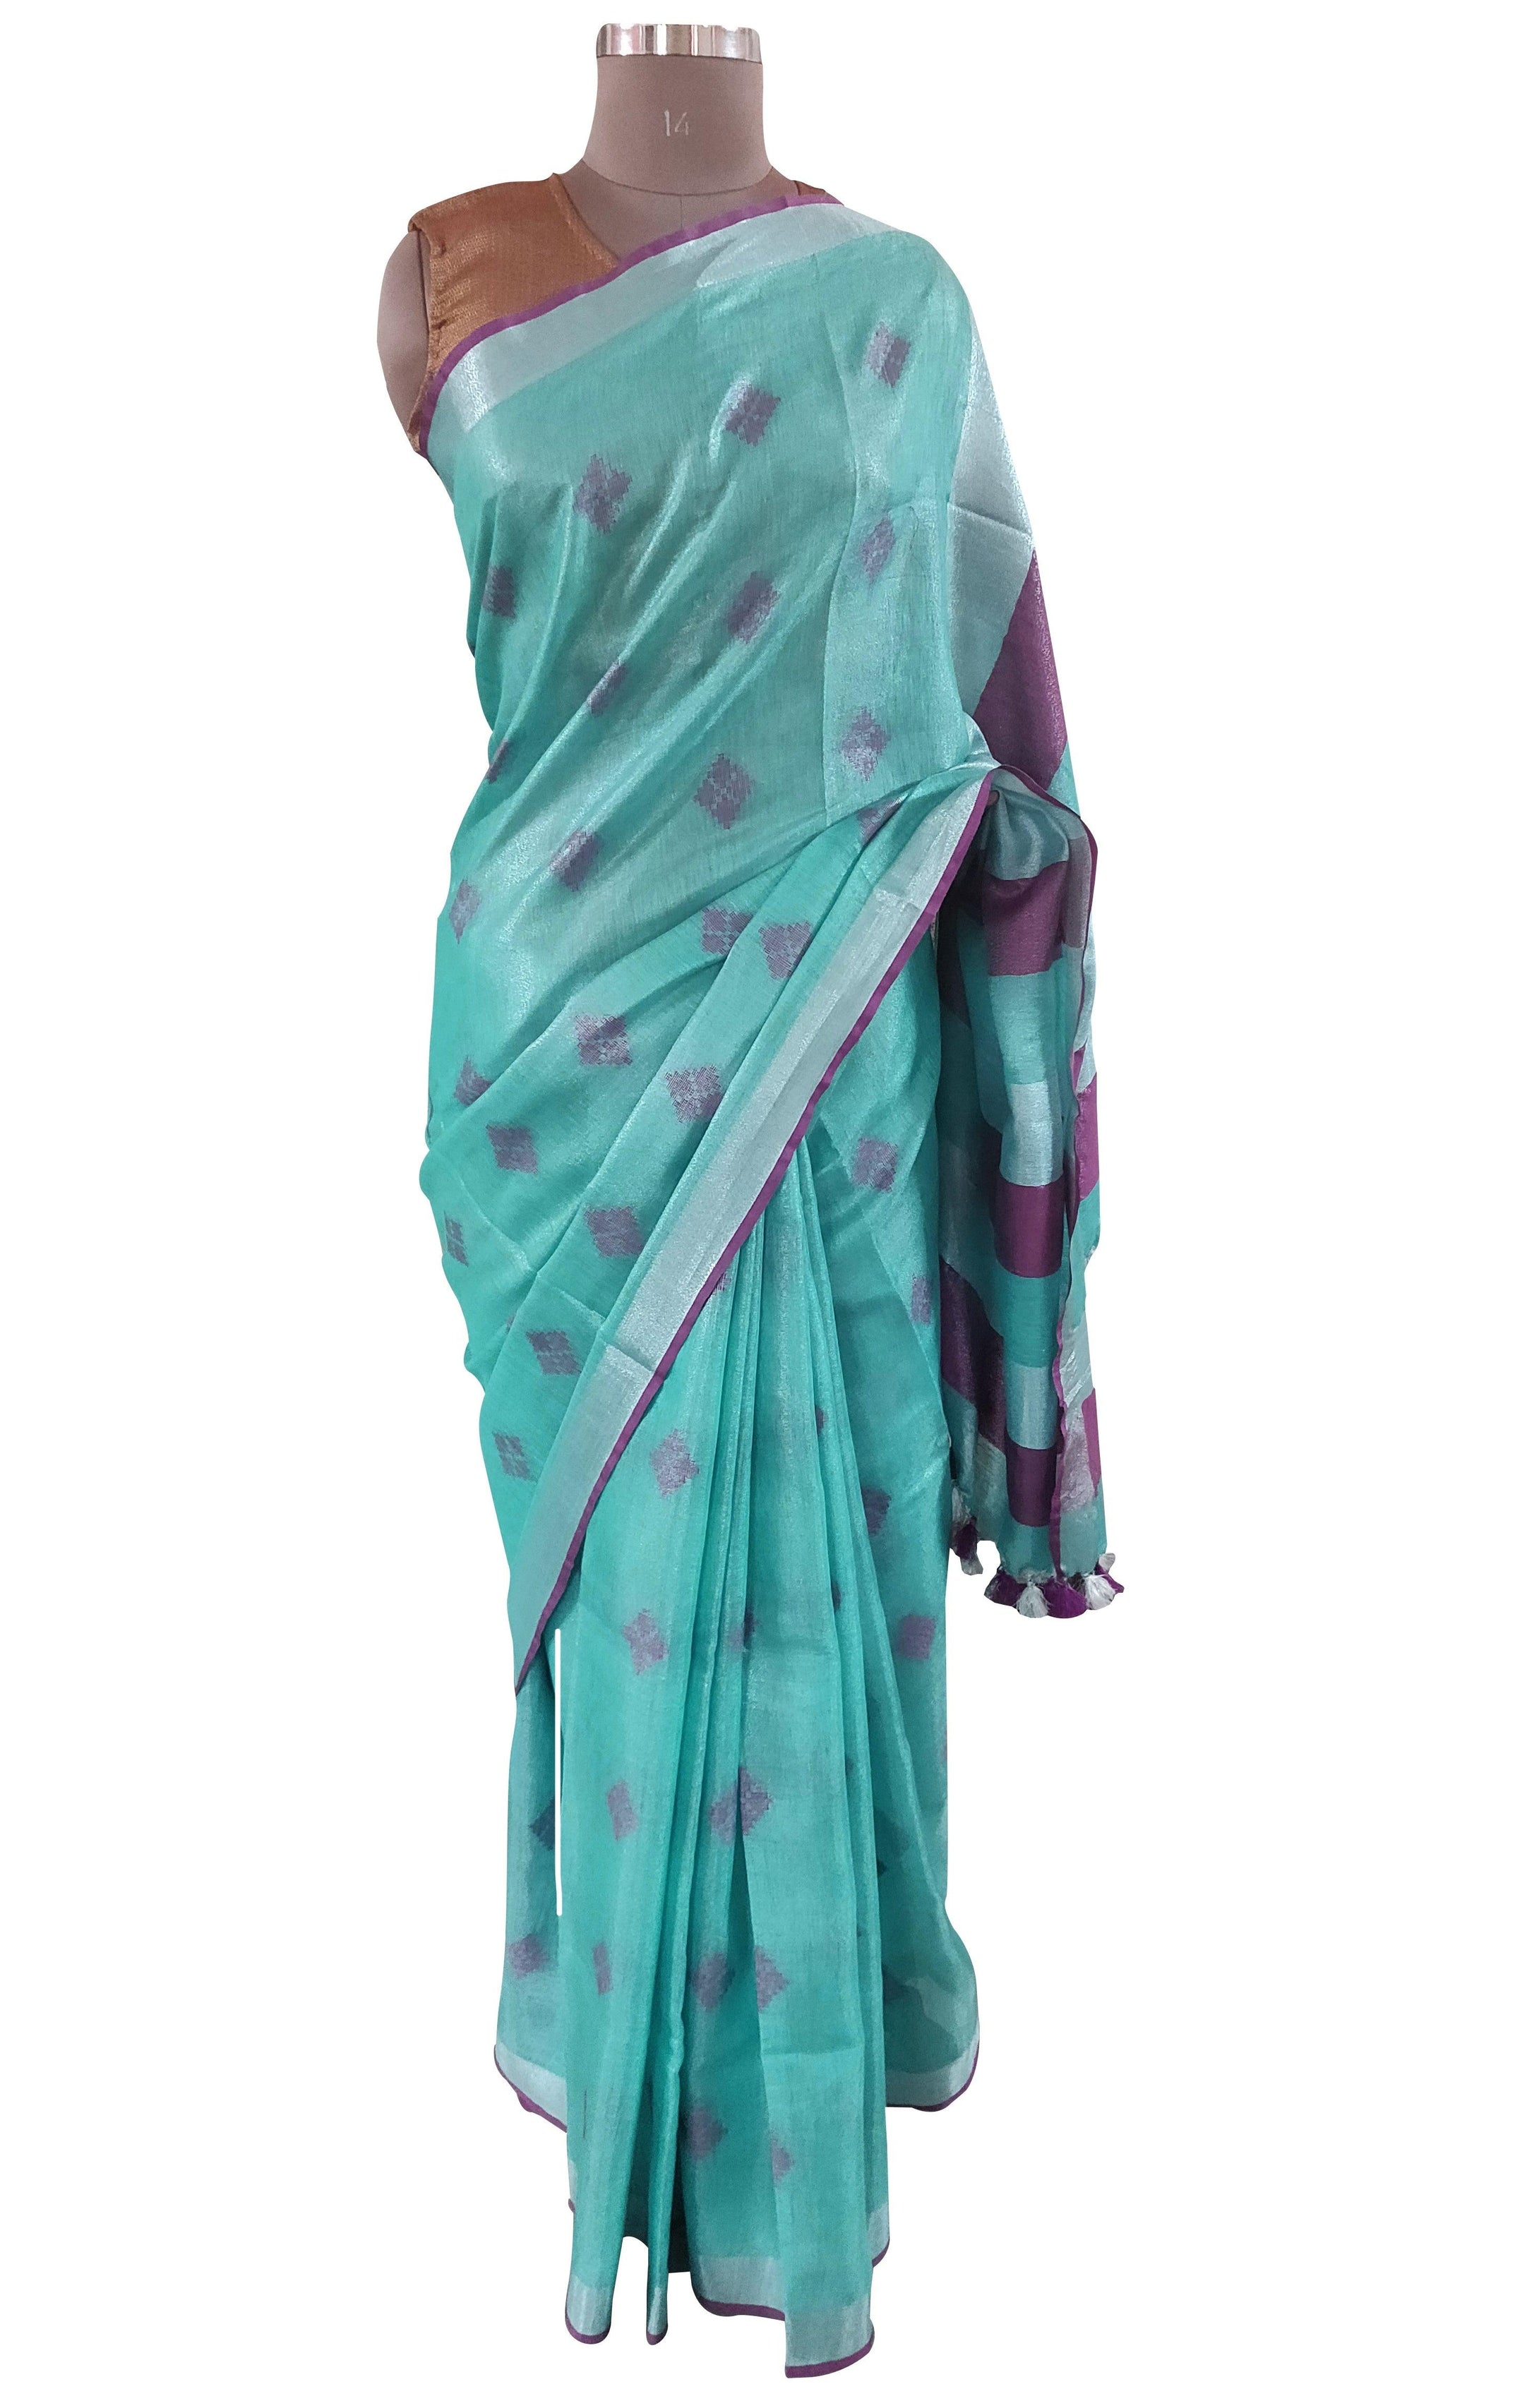 Silver Border Turquoise Tissue Linen Cotton Saree BLS07-Anvi Creations-Handloom Saree